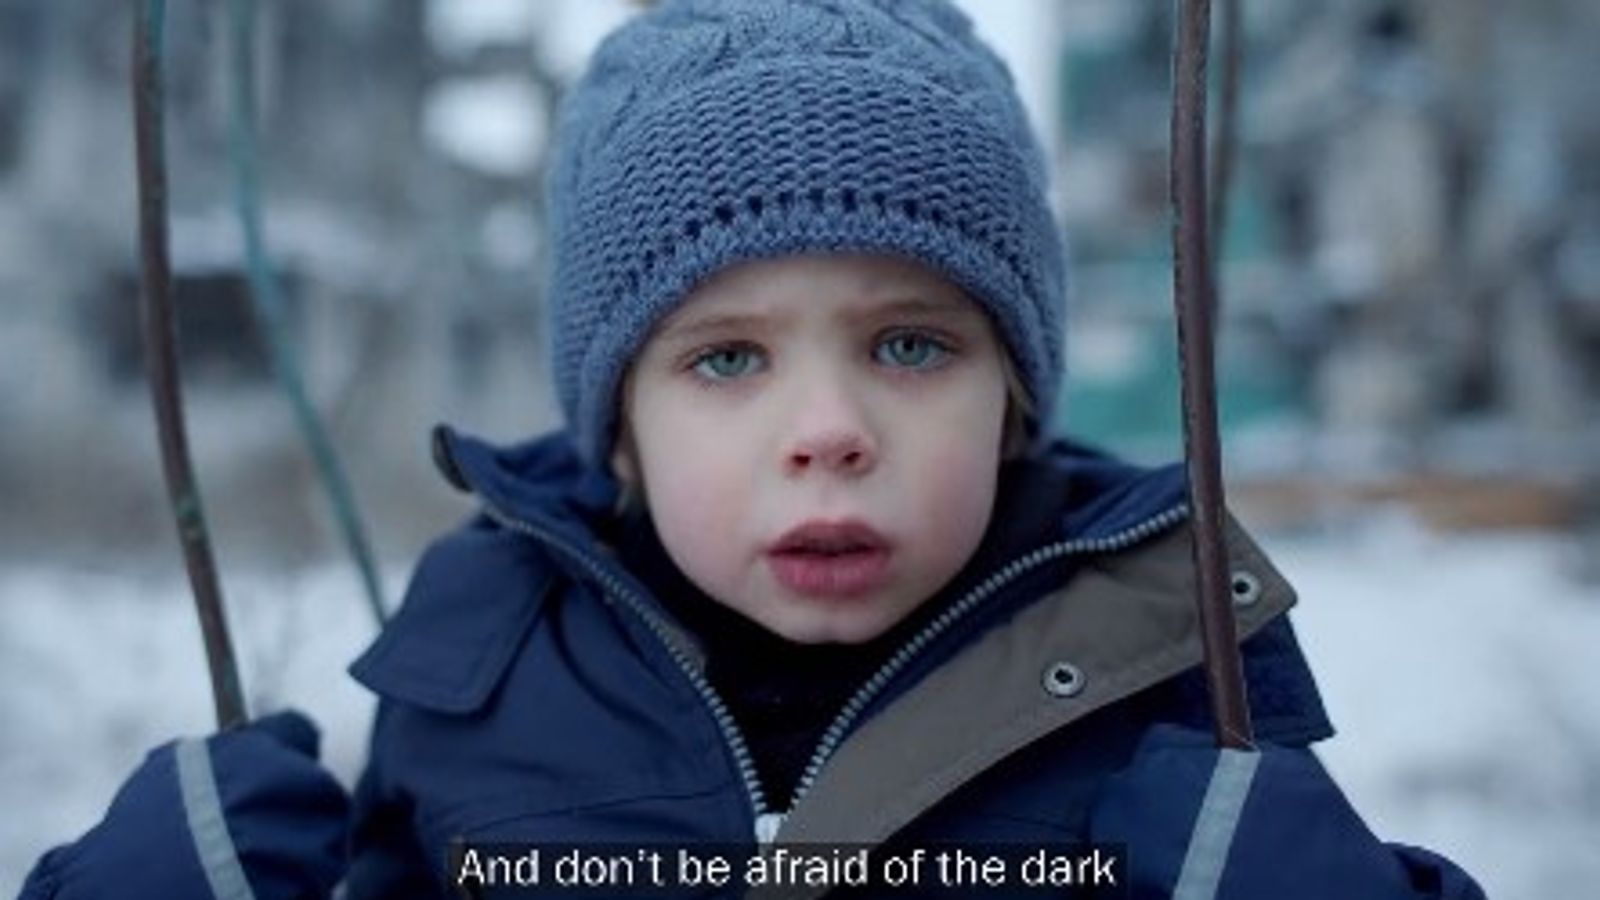 Ukrainians recite ‘You’ll Never Walk Alone’ lyrics in powerful film to mark first anniversary of war | World News